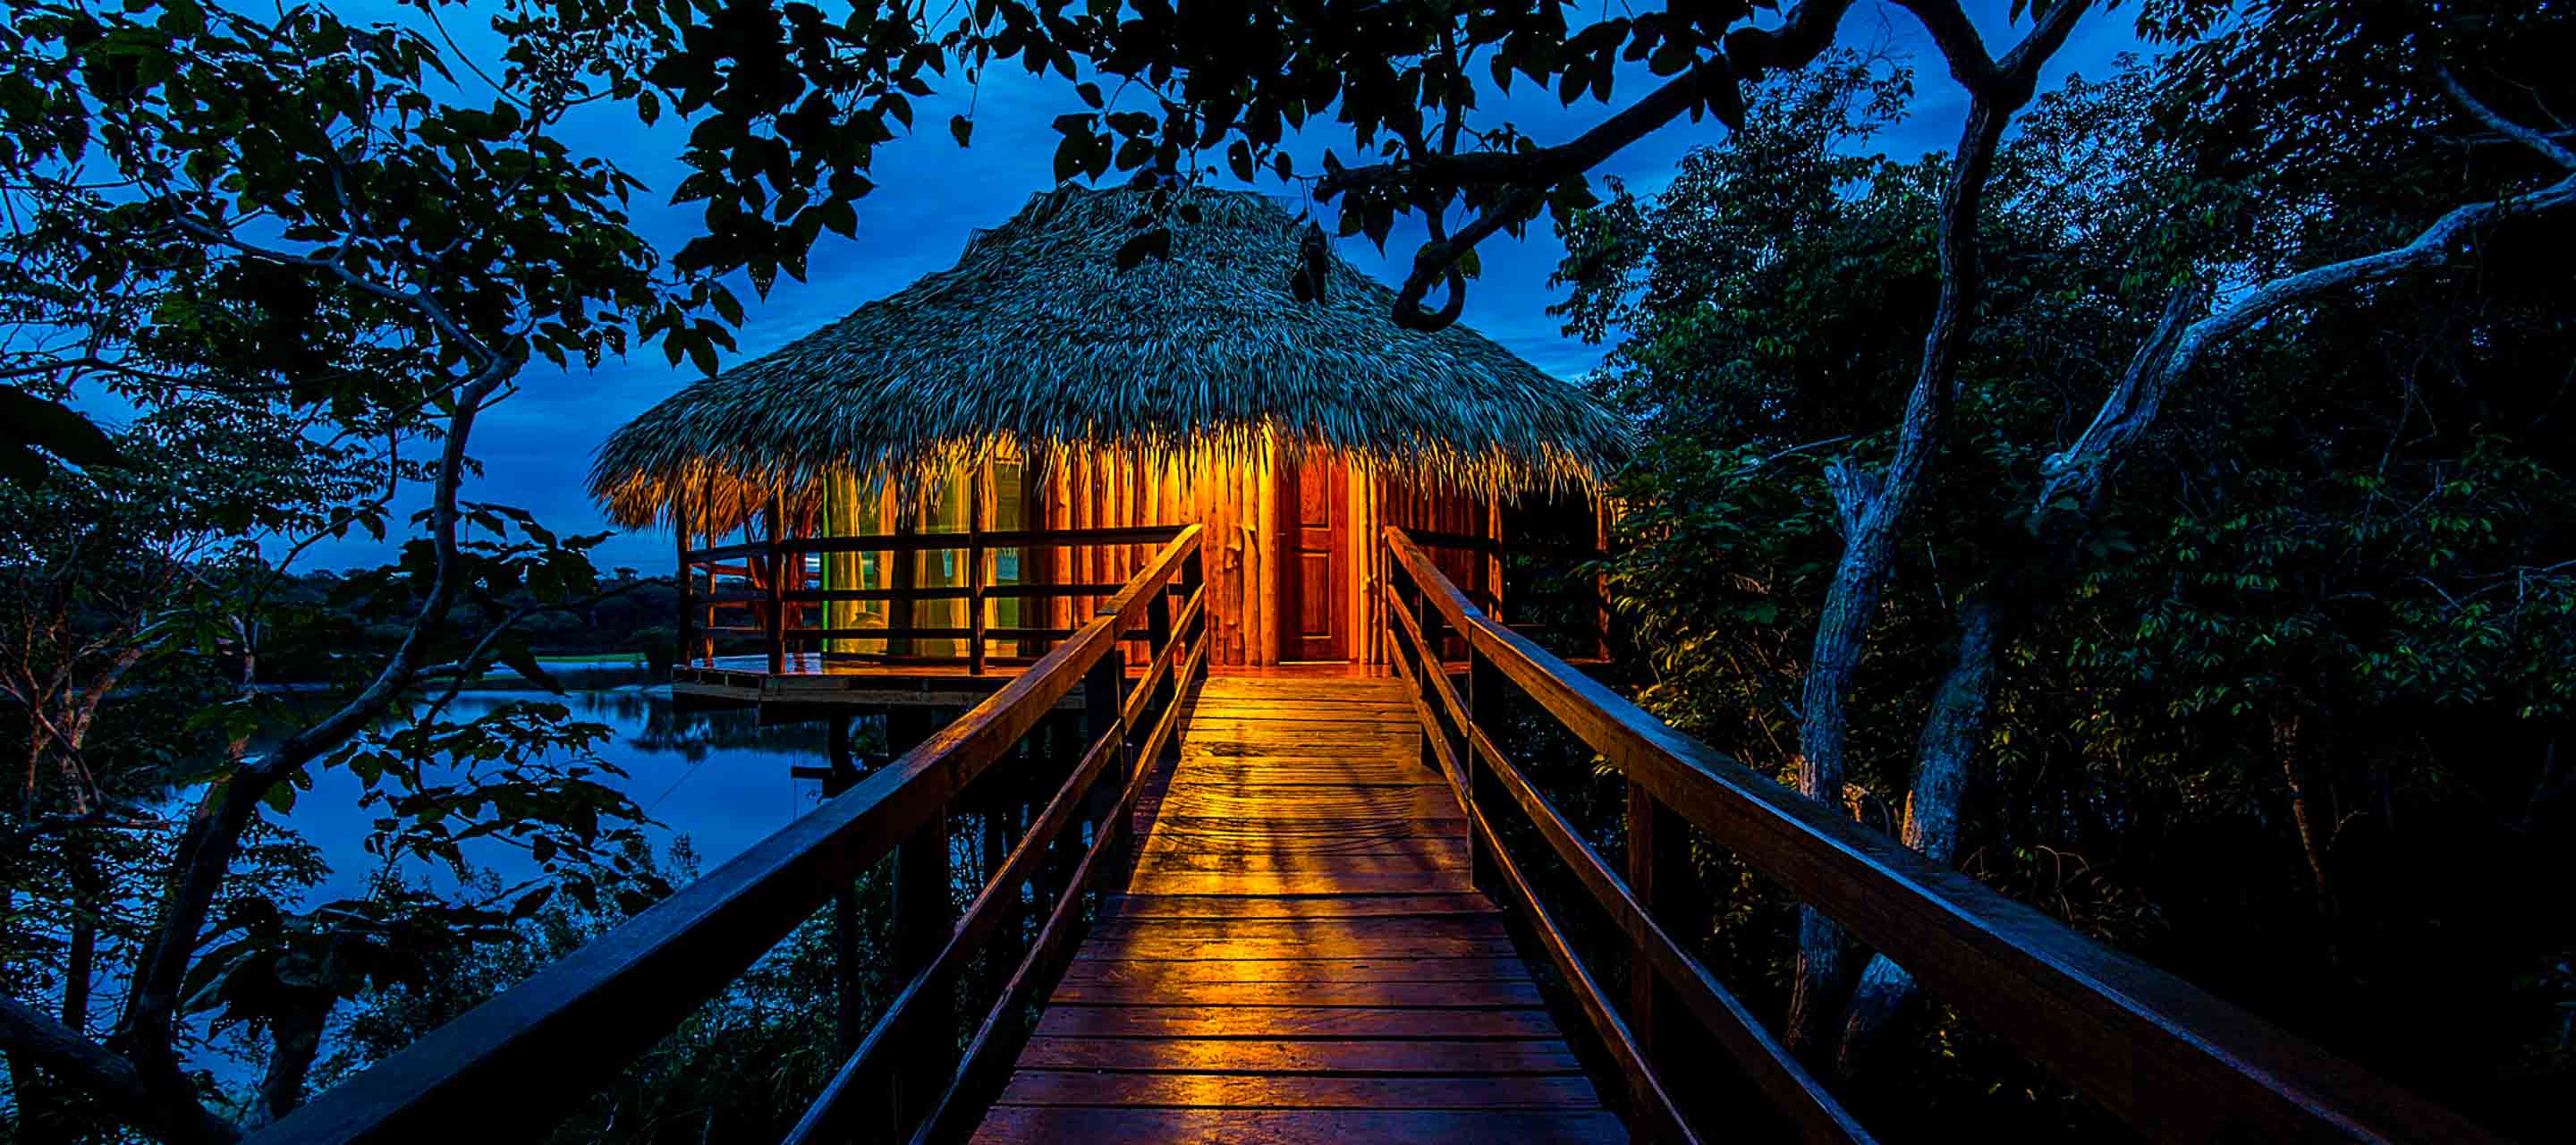 Amazon Rainforest Lodges 🦋 Peru, Ecuador and Brazil Amazon Lodges